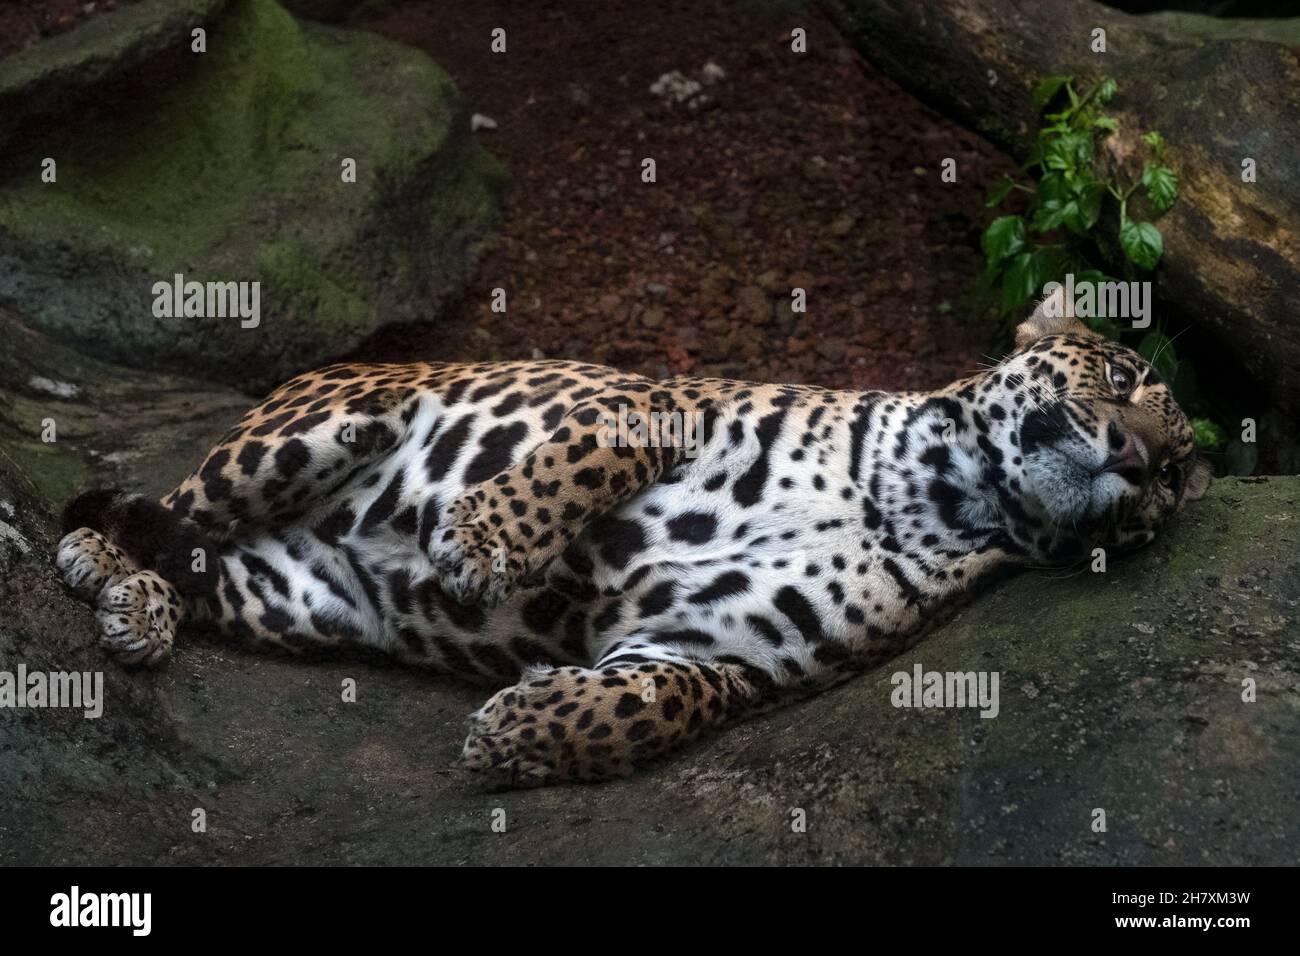 Jaguar resting in a Costa Rican nature preserve Stock Photo